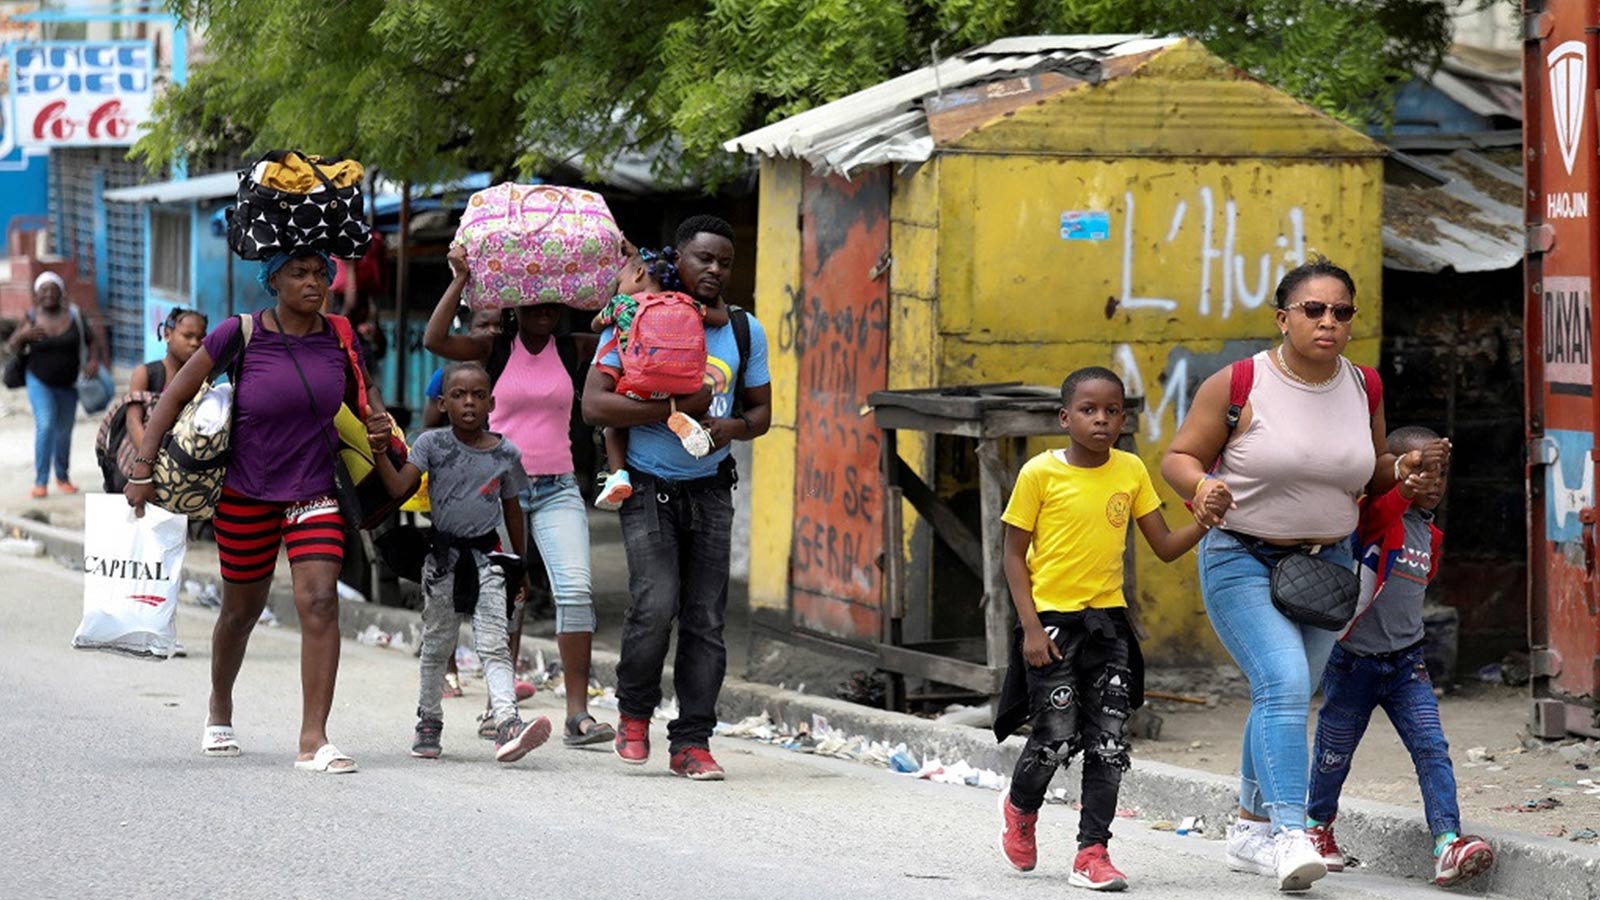 At least 75 killed in recent Haiti gang battles